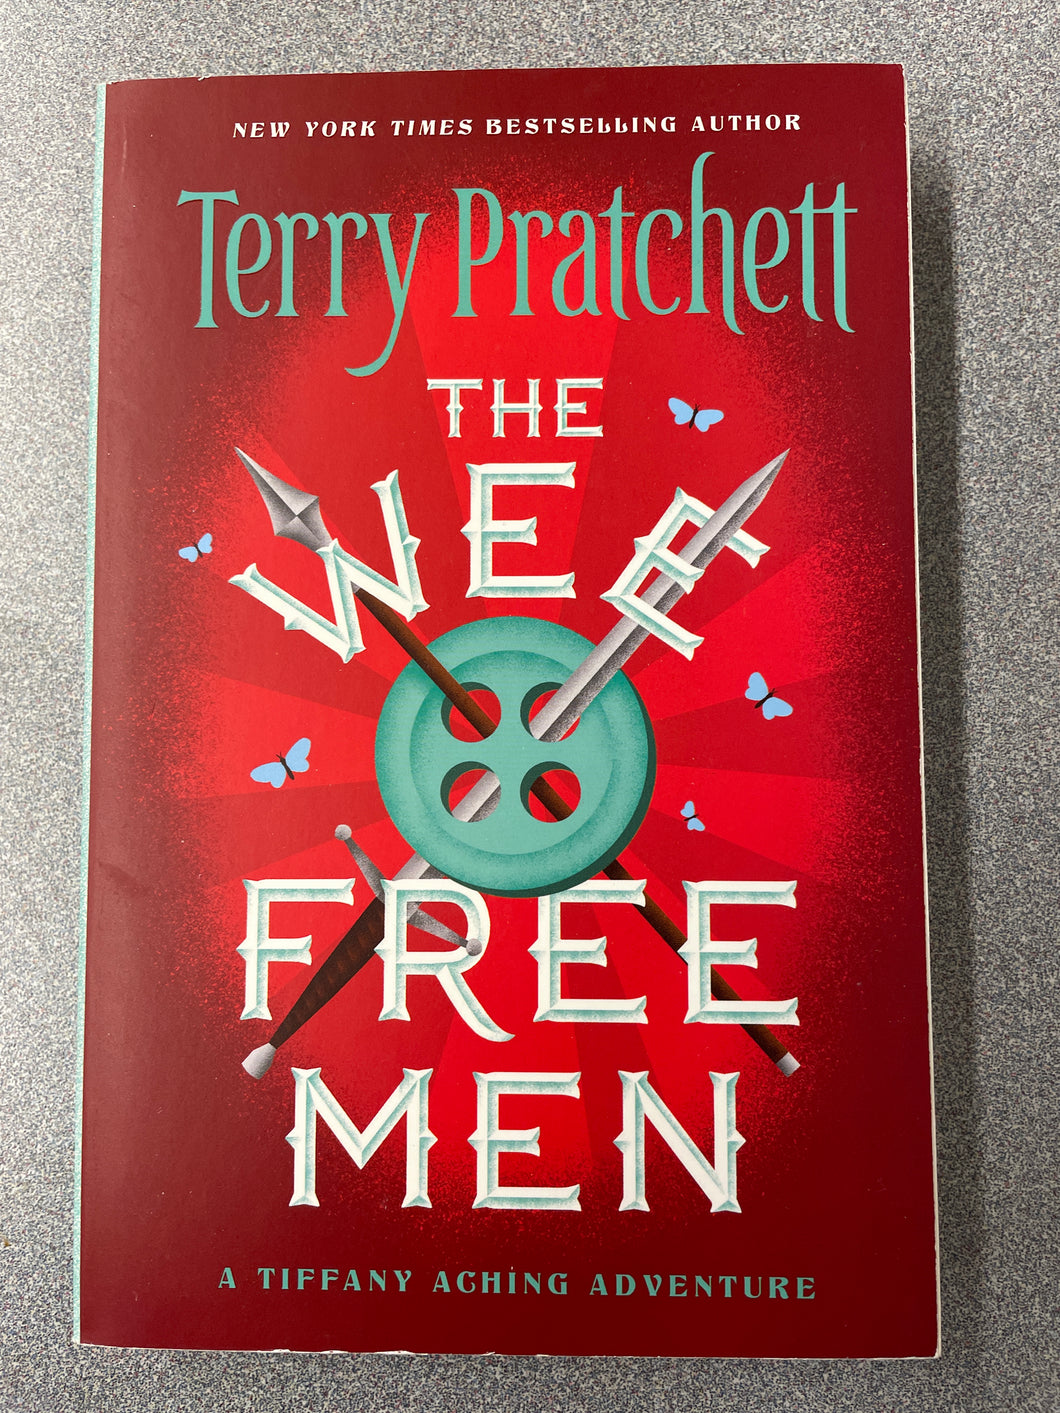 Pratchett, Terry, The Wee Free Men [2003] YF 12/23